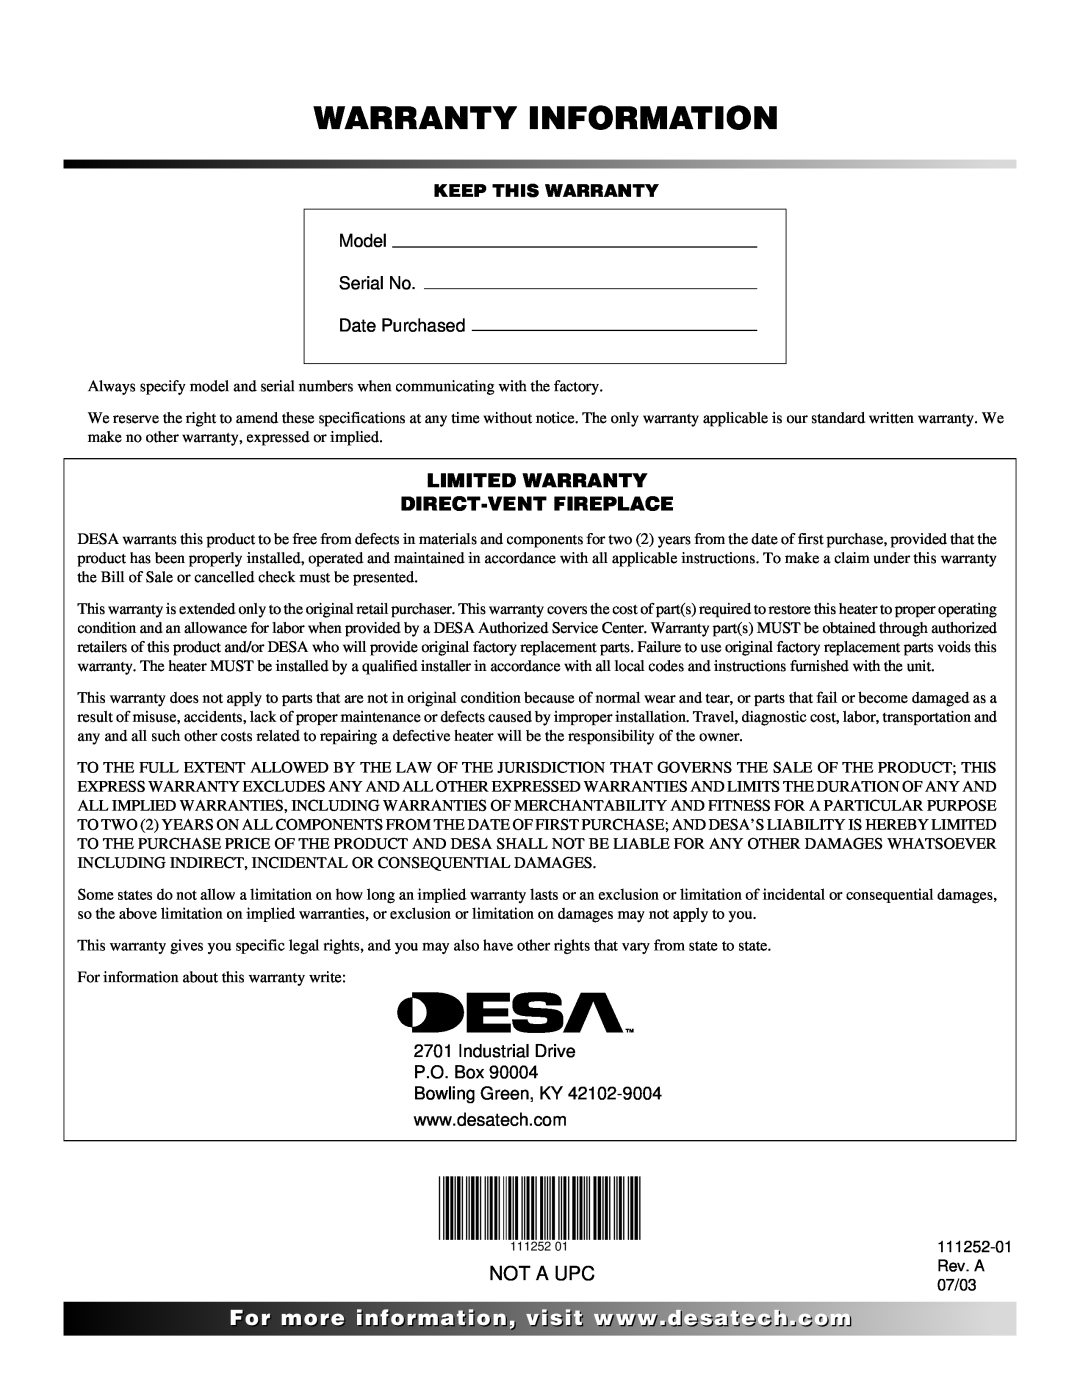 Desa CHDV36NRA installation manual Limited Warranty Direct-Ventfireplace, Not A Upc, Warranty Information 